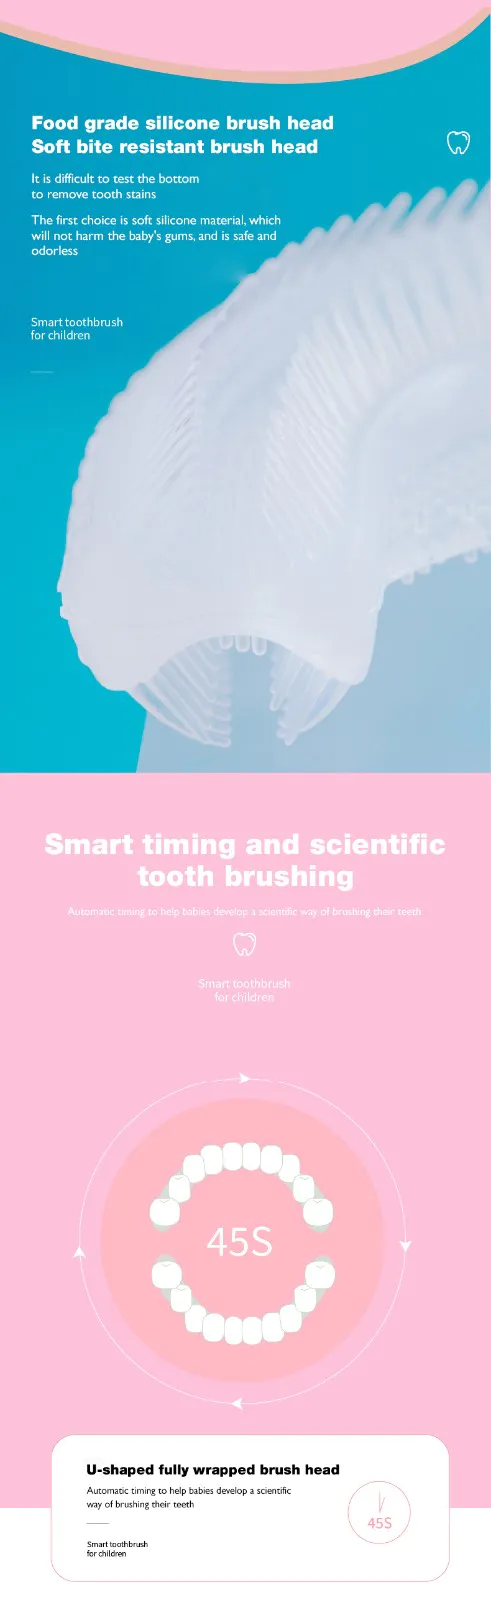 GlorySmile best smart toothbrush company for teeth